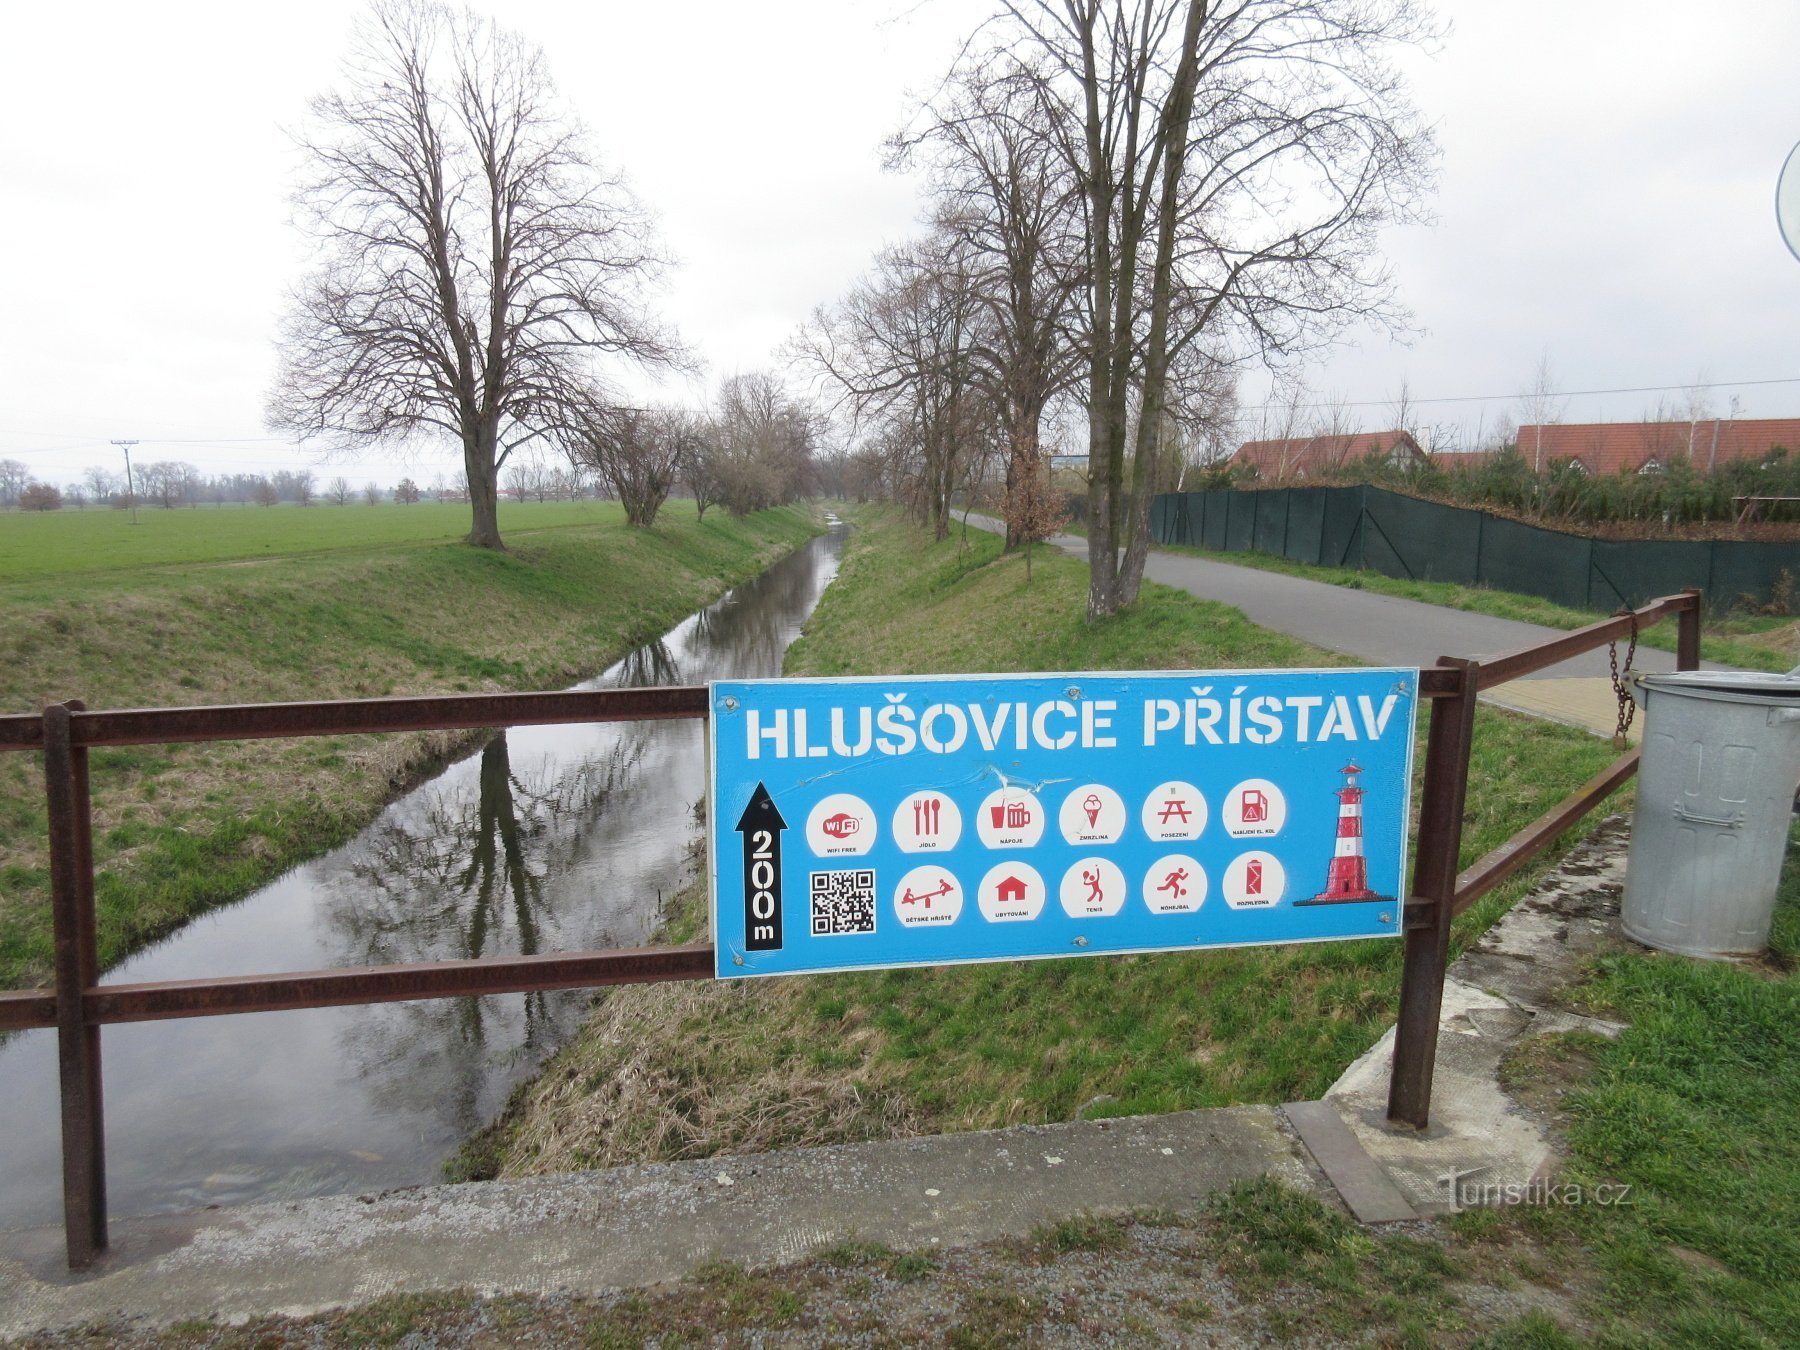 Trusovický potok - наш другий міст